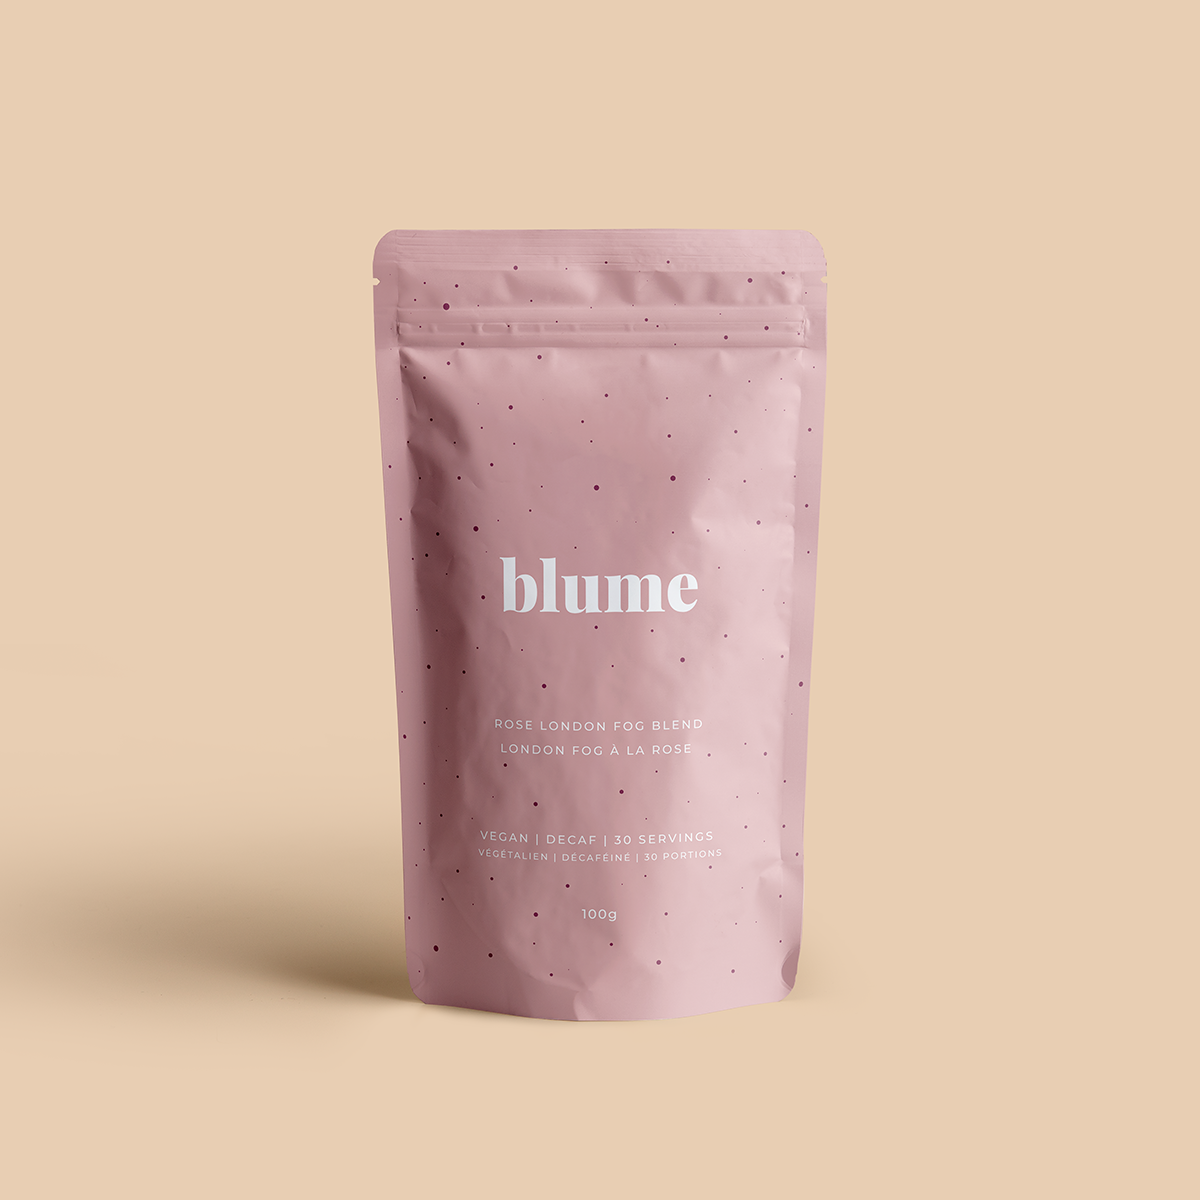 Blume - Rose London Fog Blend: Adatogenic Latte